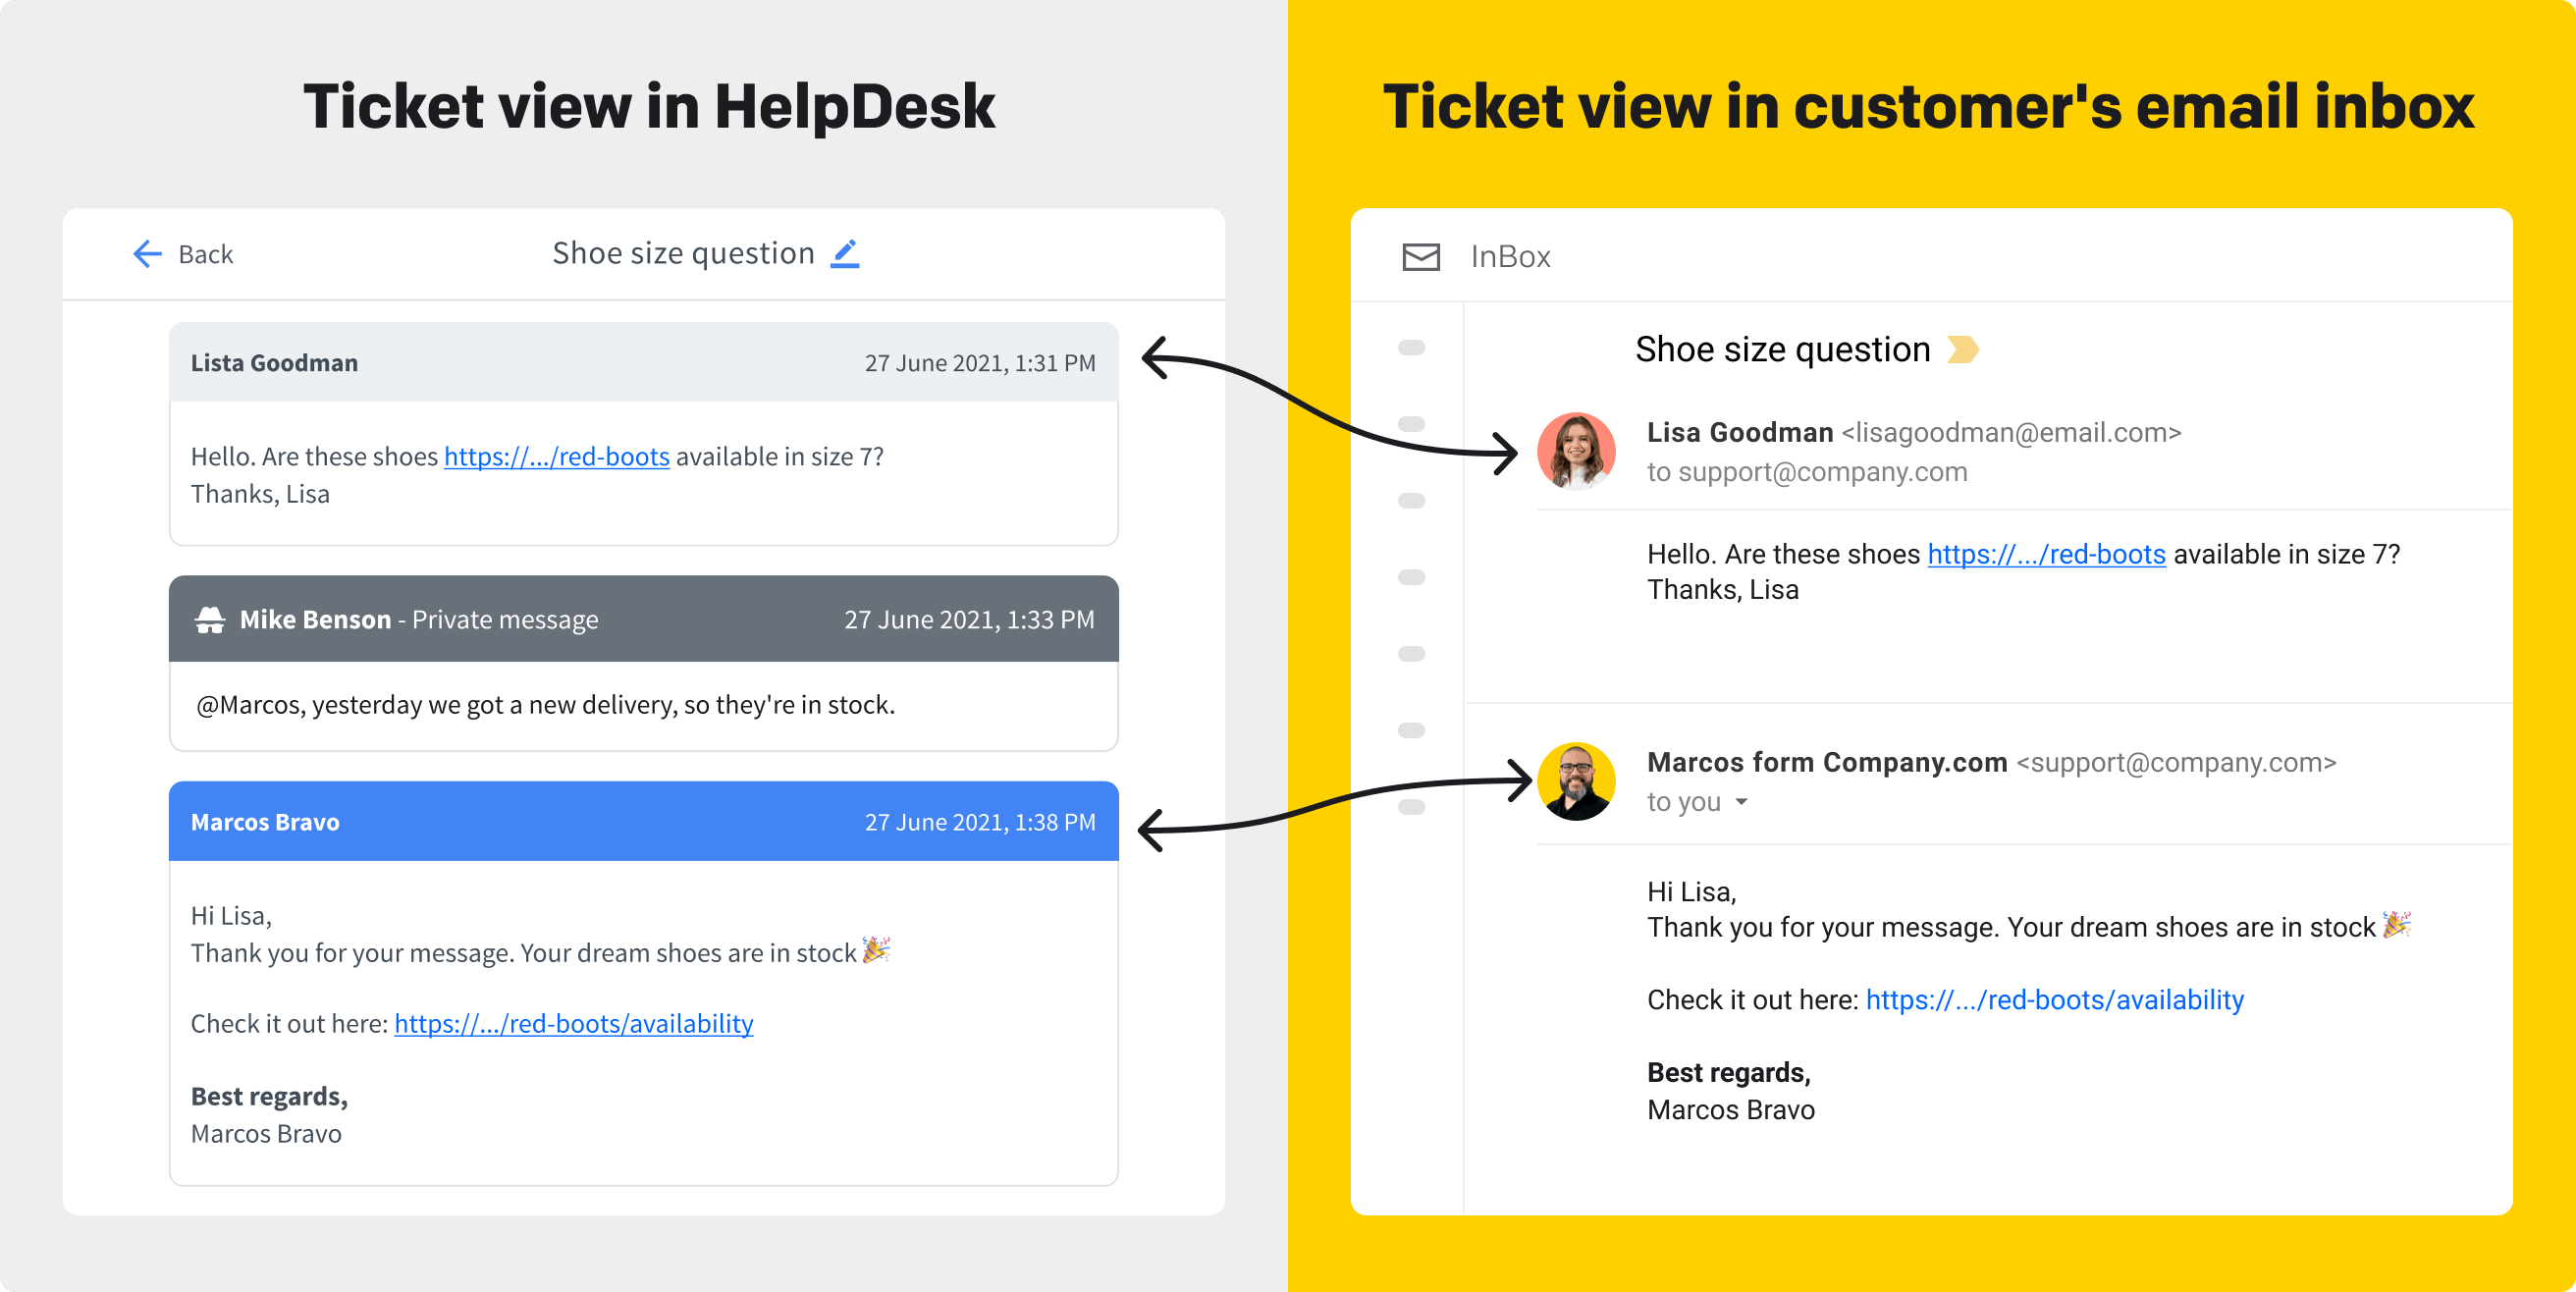 Ticket view in HelpDesk